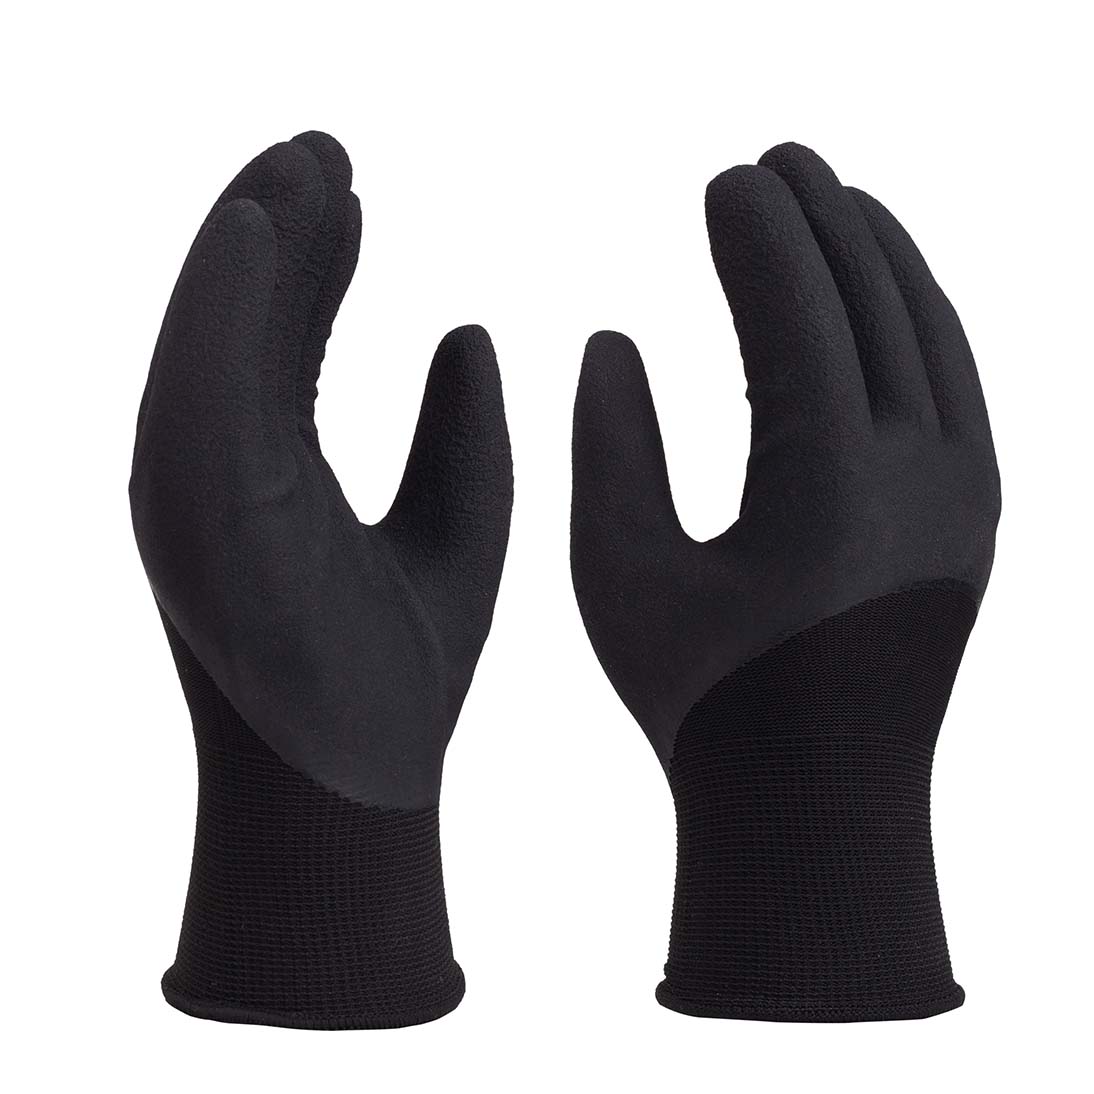 Best Work Gloves For Handling Wood,Best Ranch Gloves,Nitrile Foam Coated Gloves